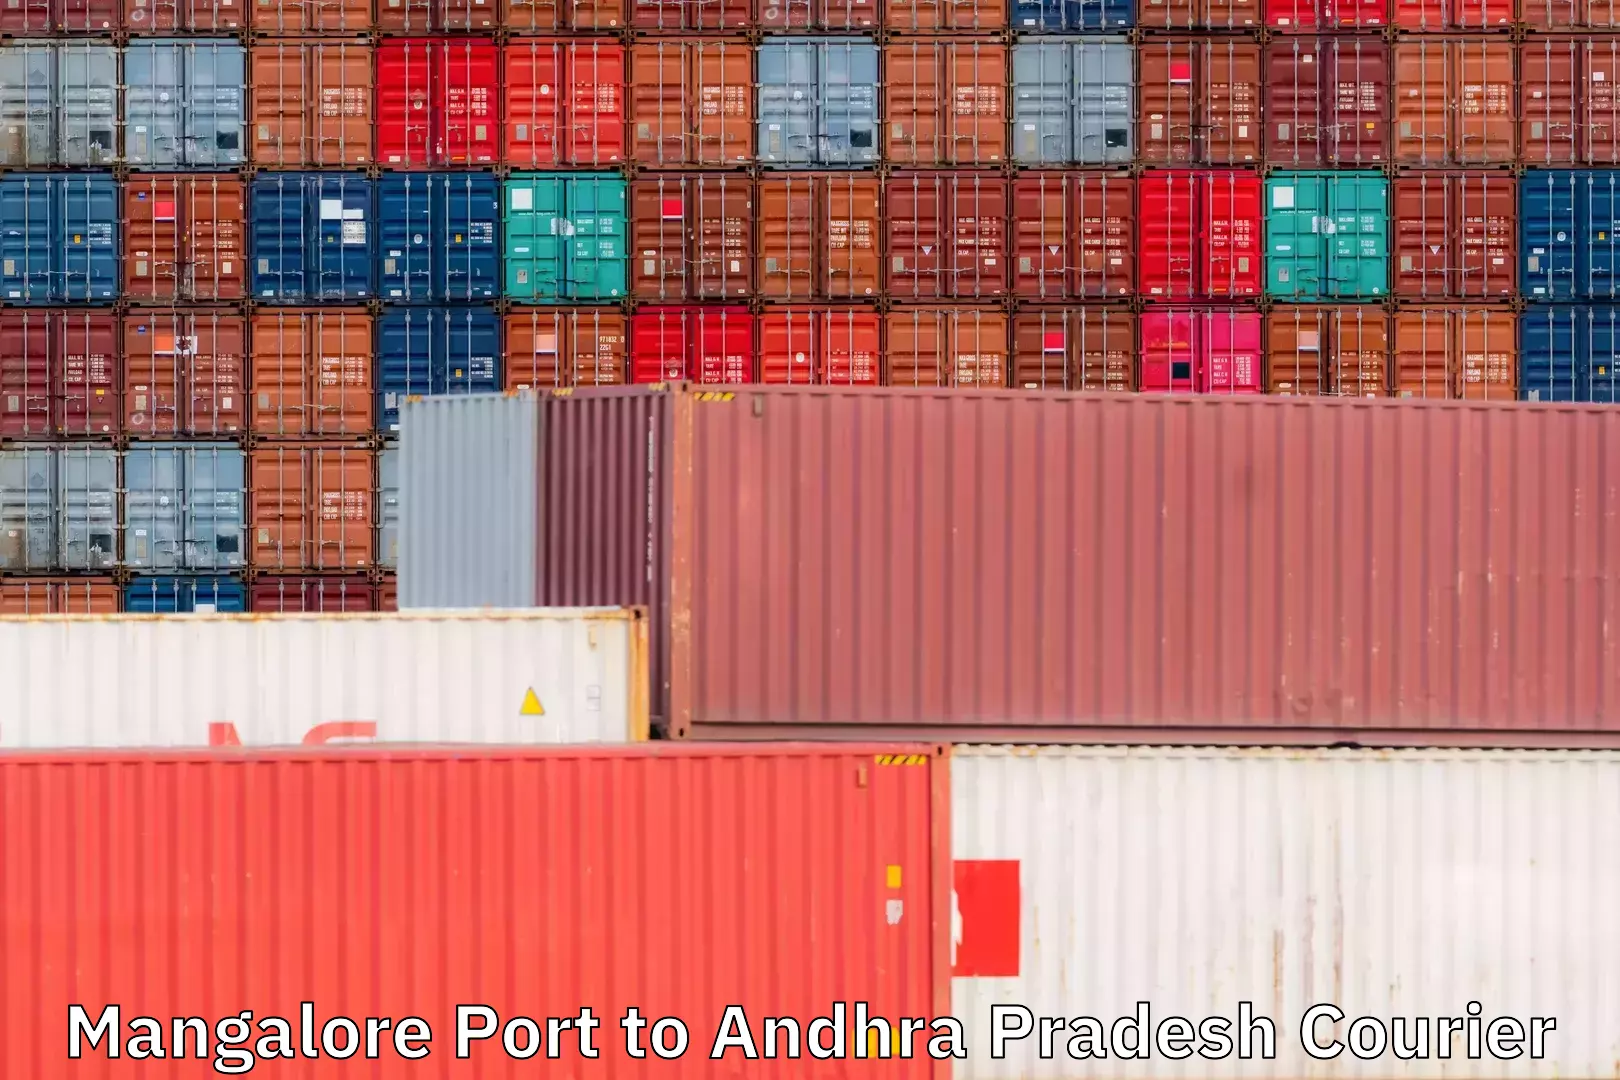 Courier service partnerships Mangalore Port to Andhra Pradesh